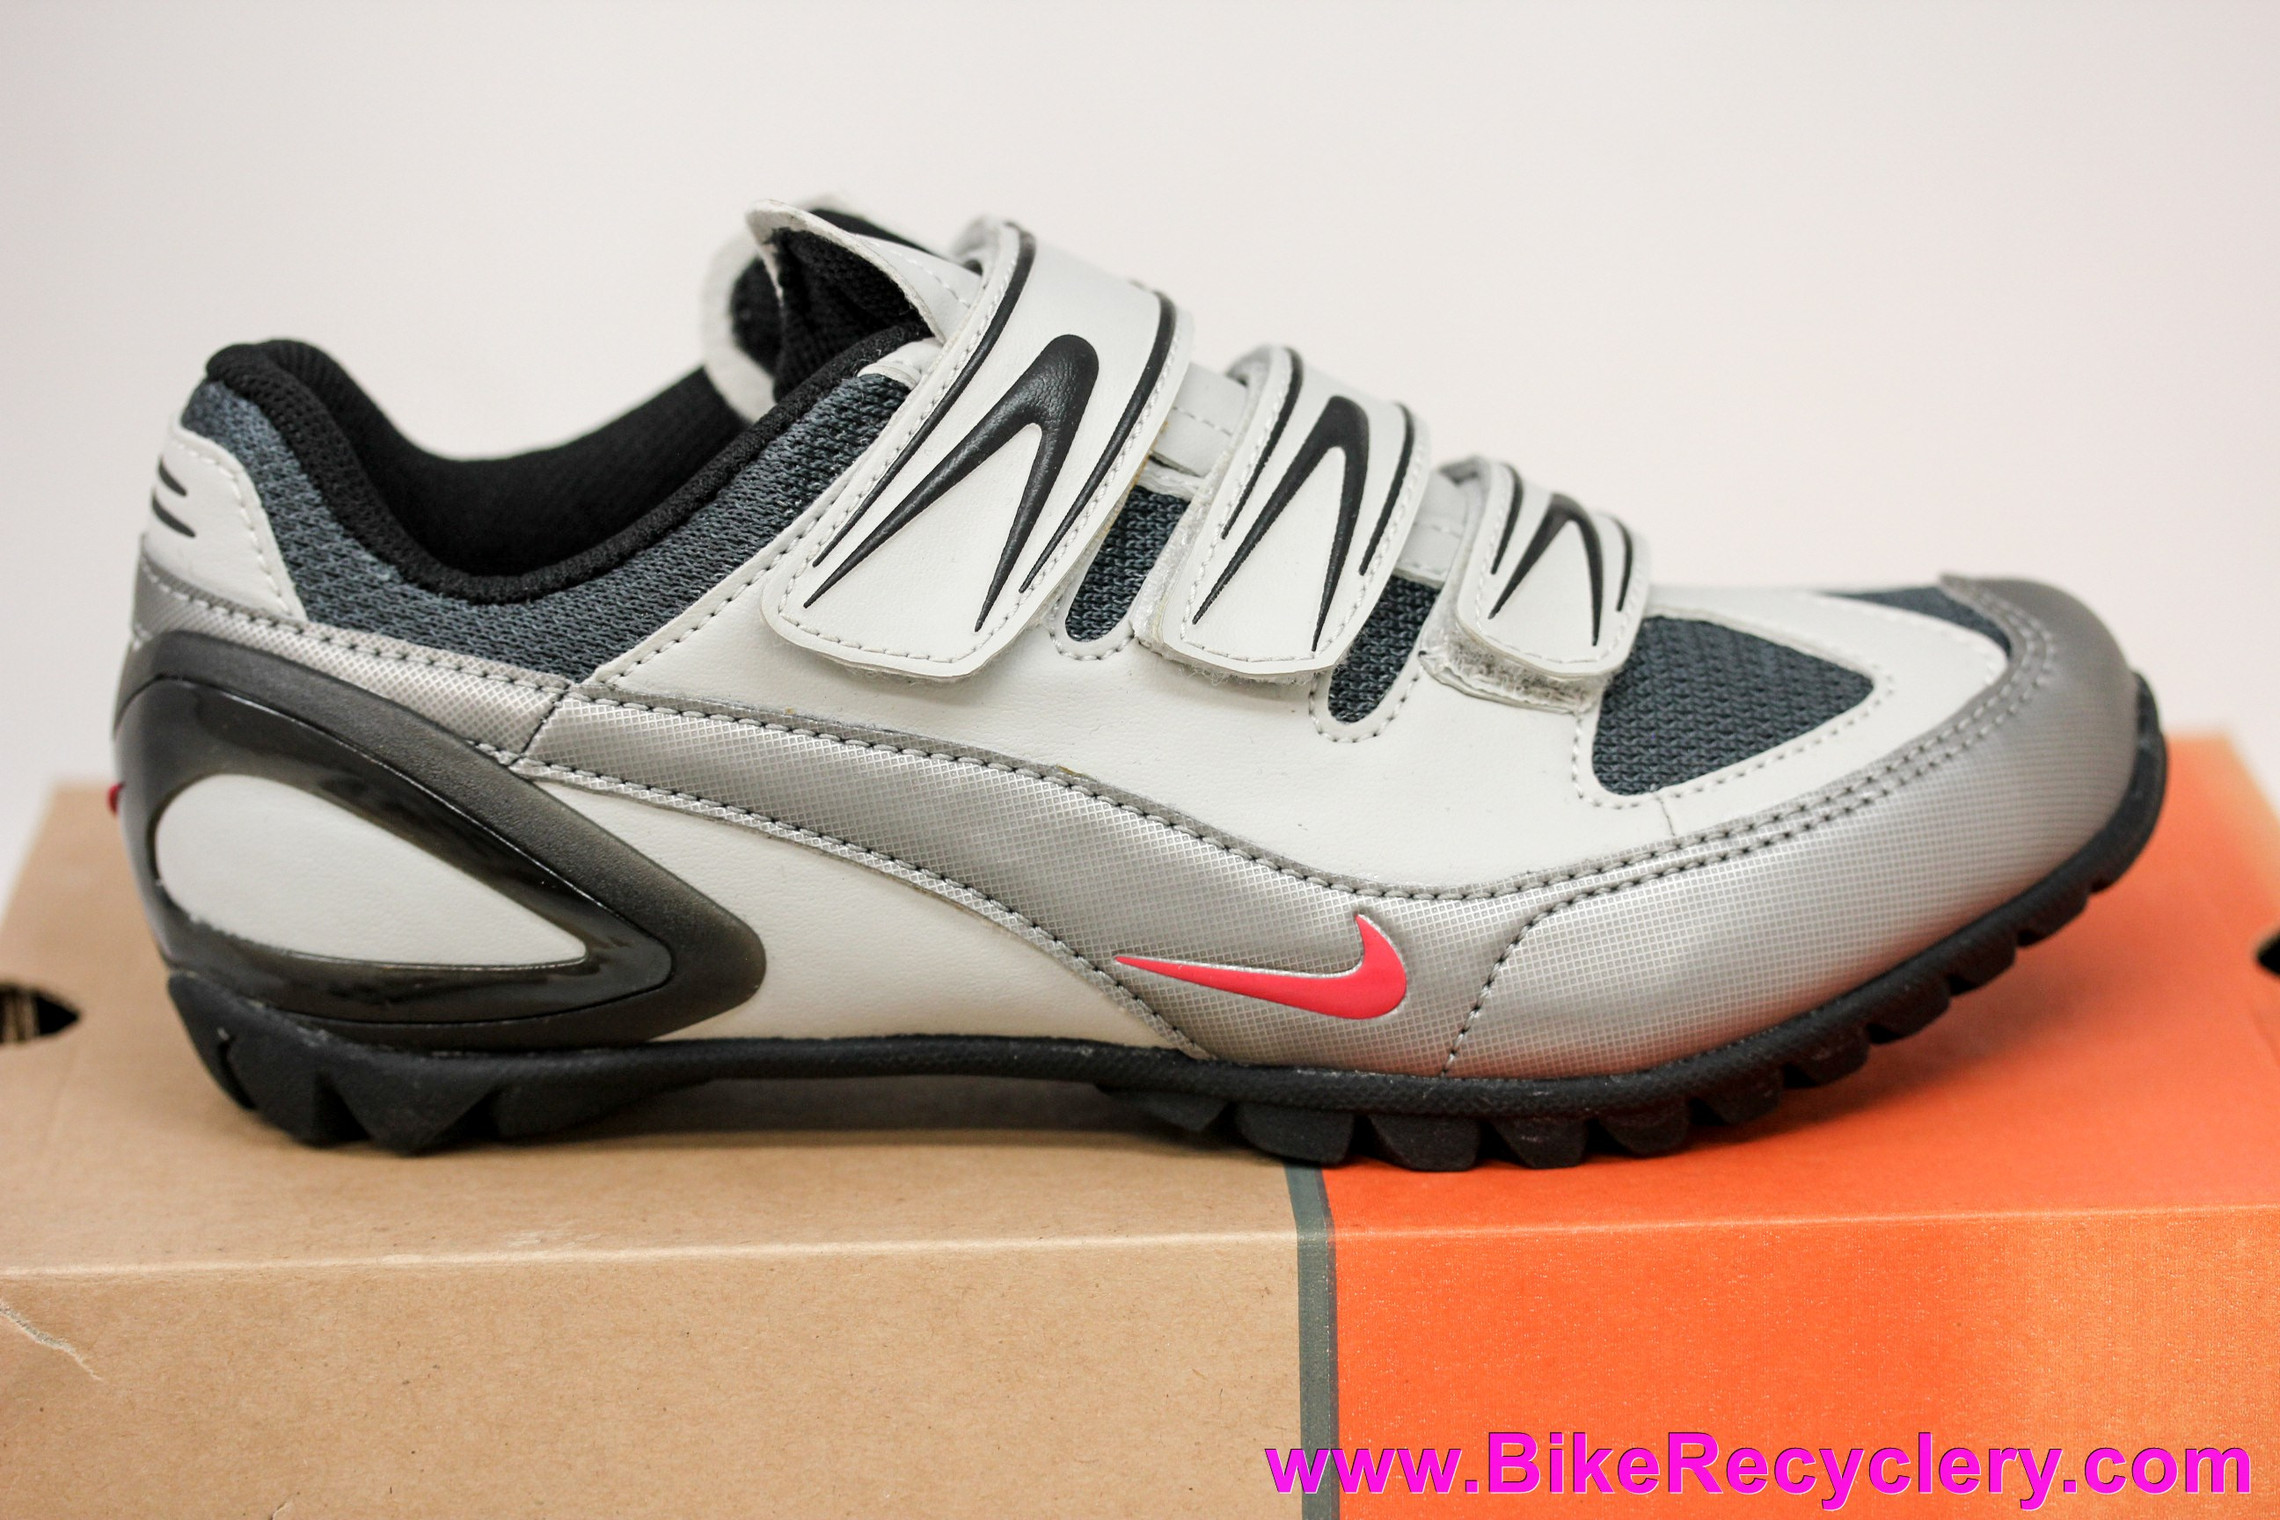 rigidez Complicado Discrepancia Nike Granfondo WR Women's Road Cycling / Spin Shoes: Size 37 - Two Bolt  Cleats - Walkable - Grey/Black (NEW) - Bike Recyclery